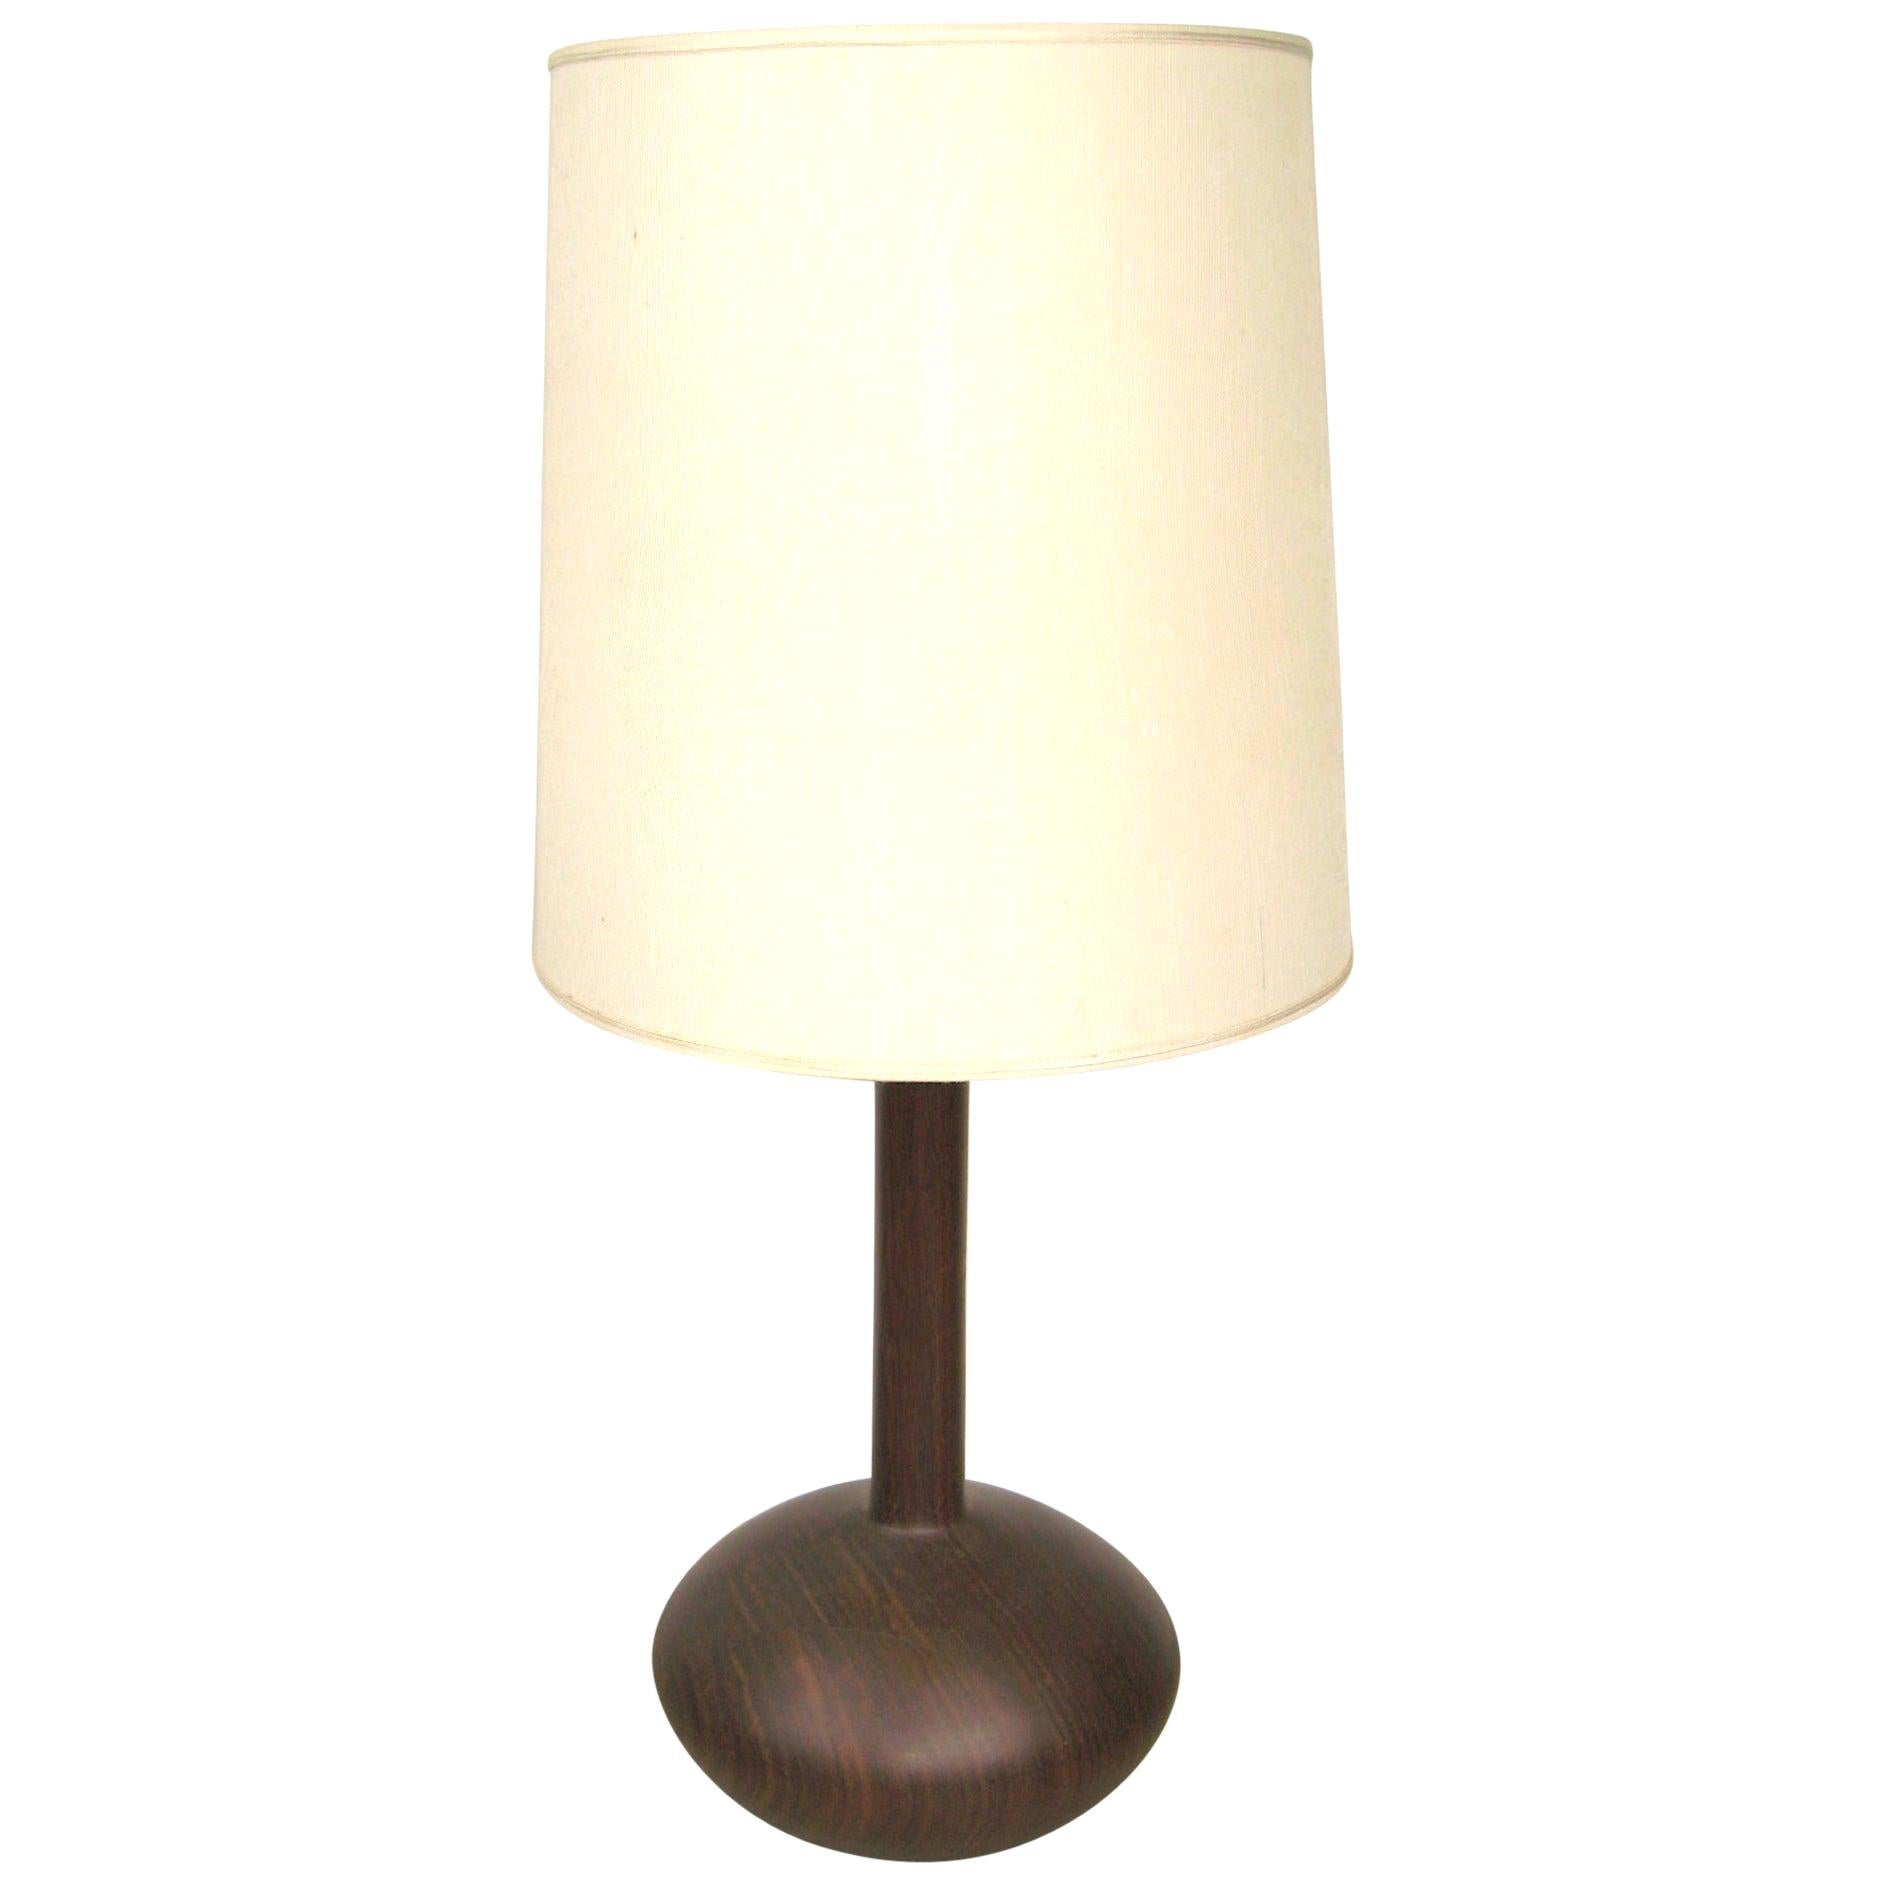  Mid-Century Modern Teak wood Table Lamp, 1960s For Sale